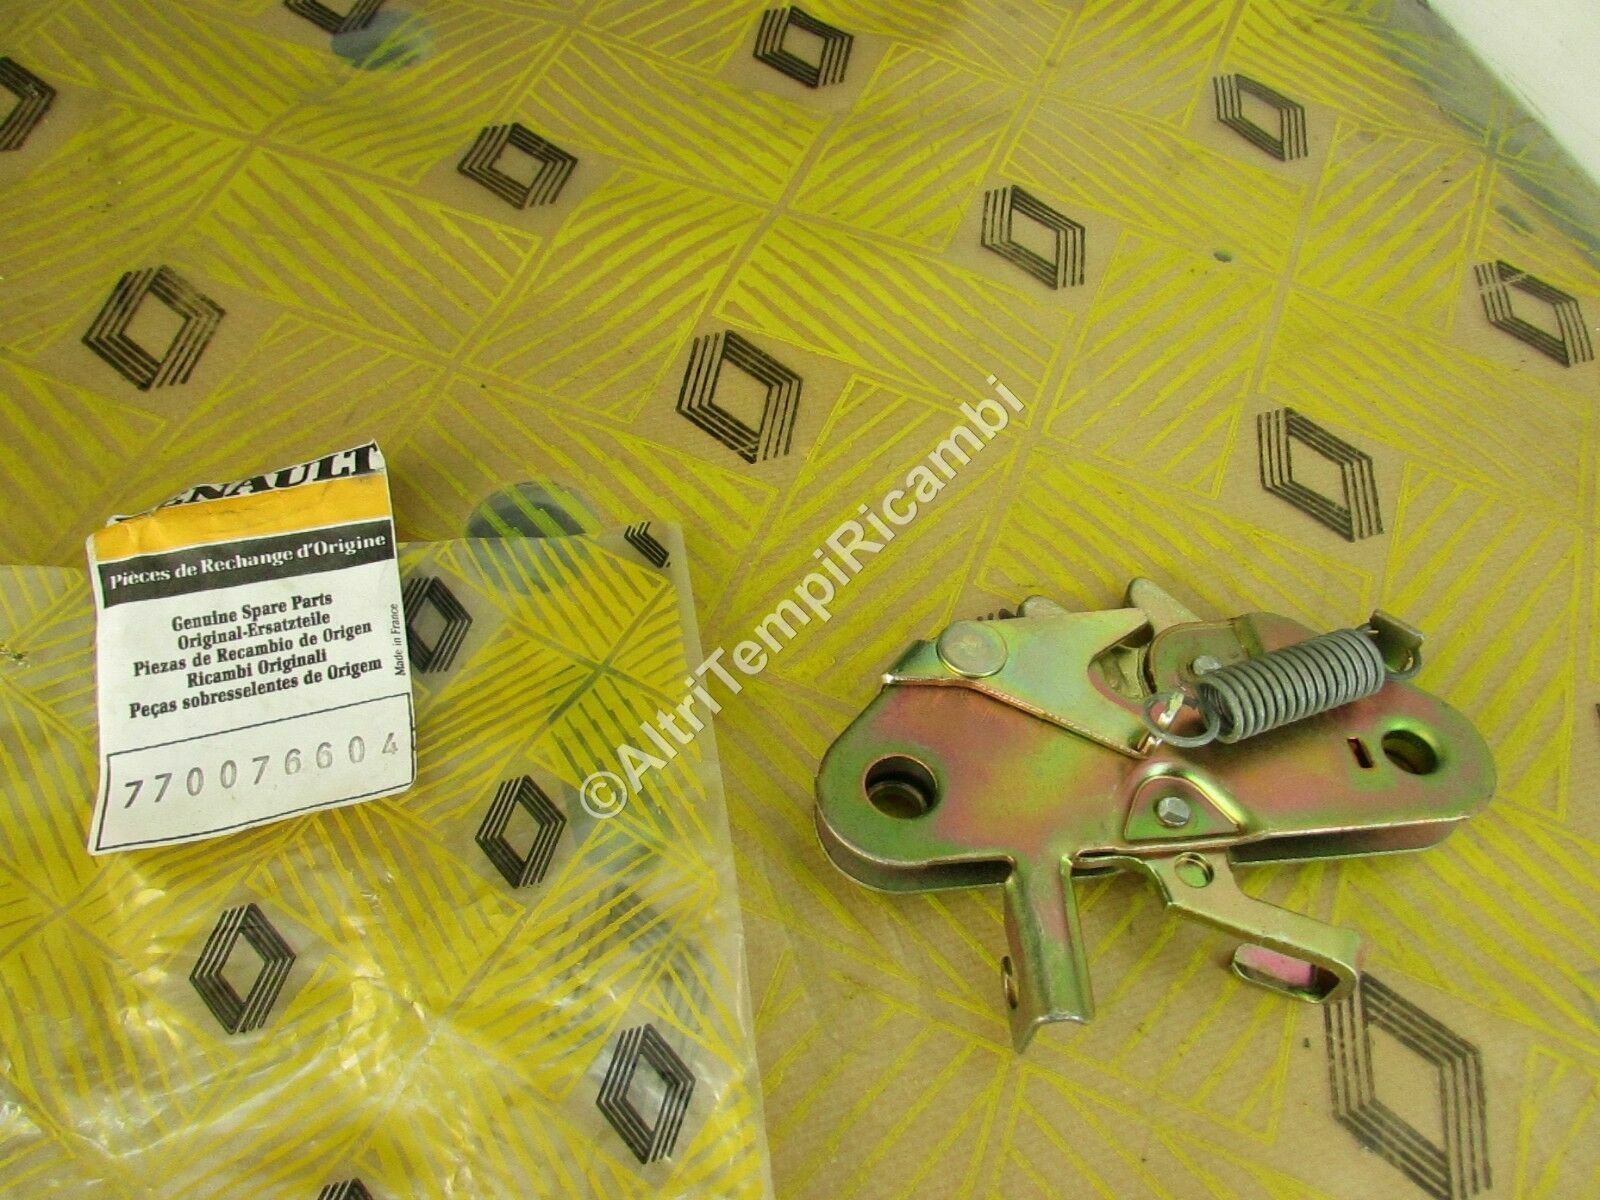 Lock Bonnet Renault EXPRESS 7700766047